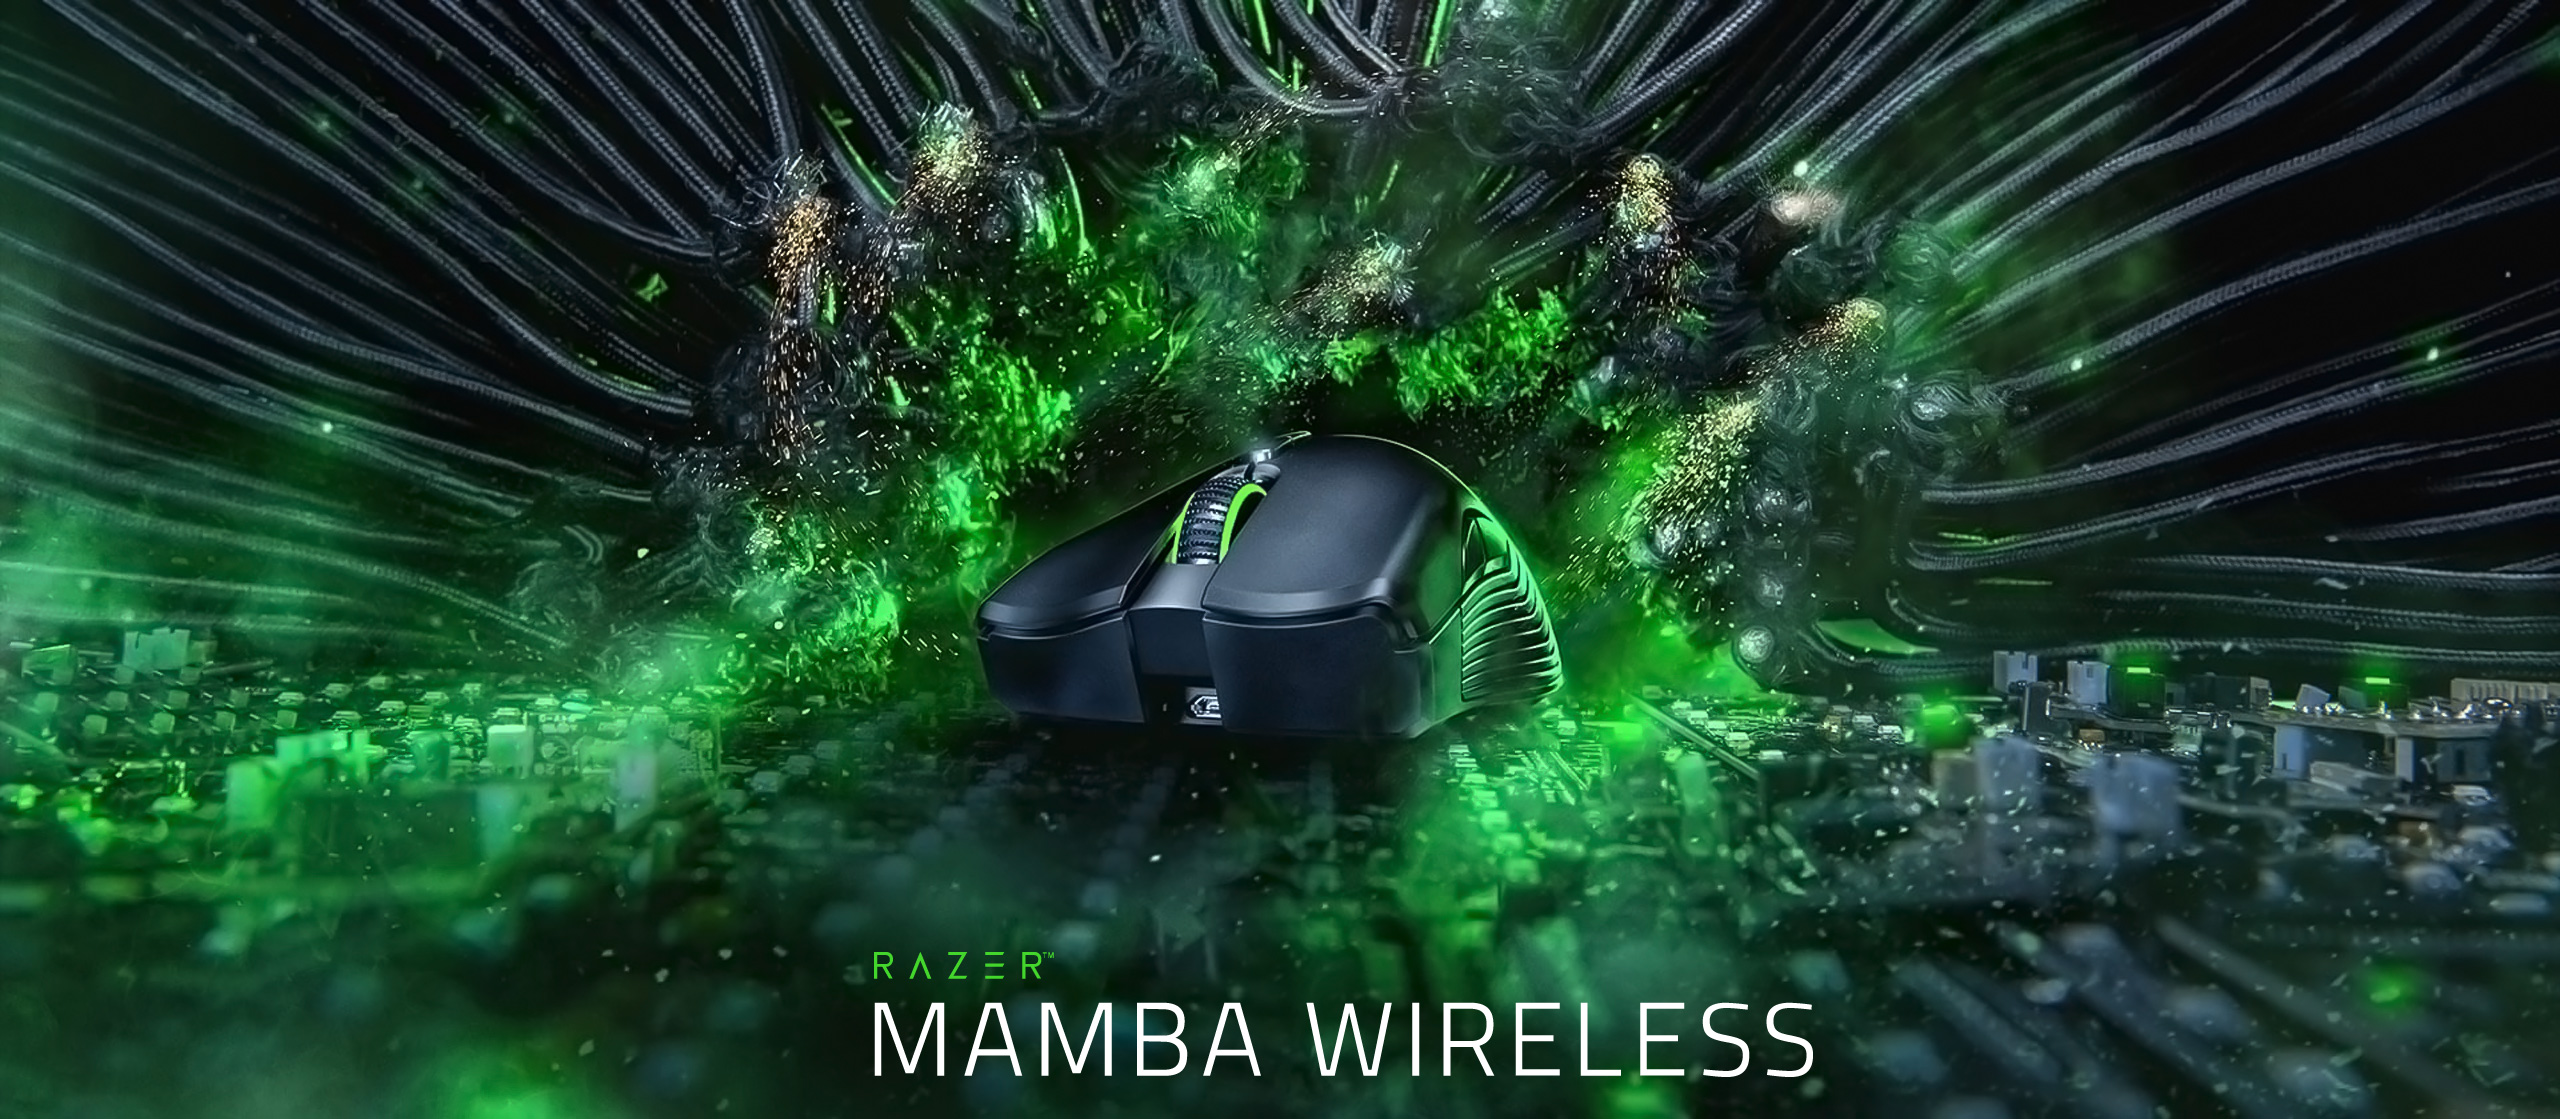 razer mamba wireless